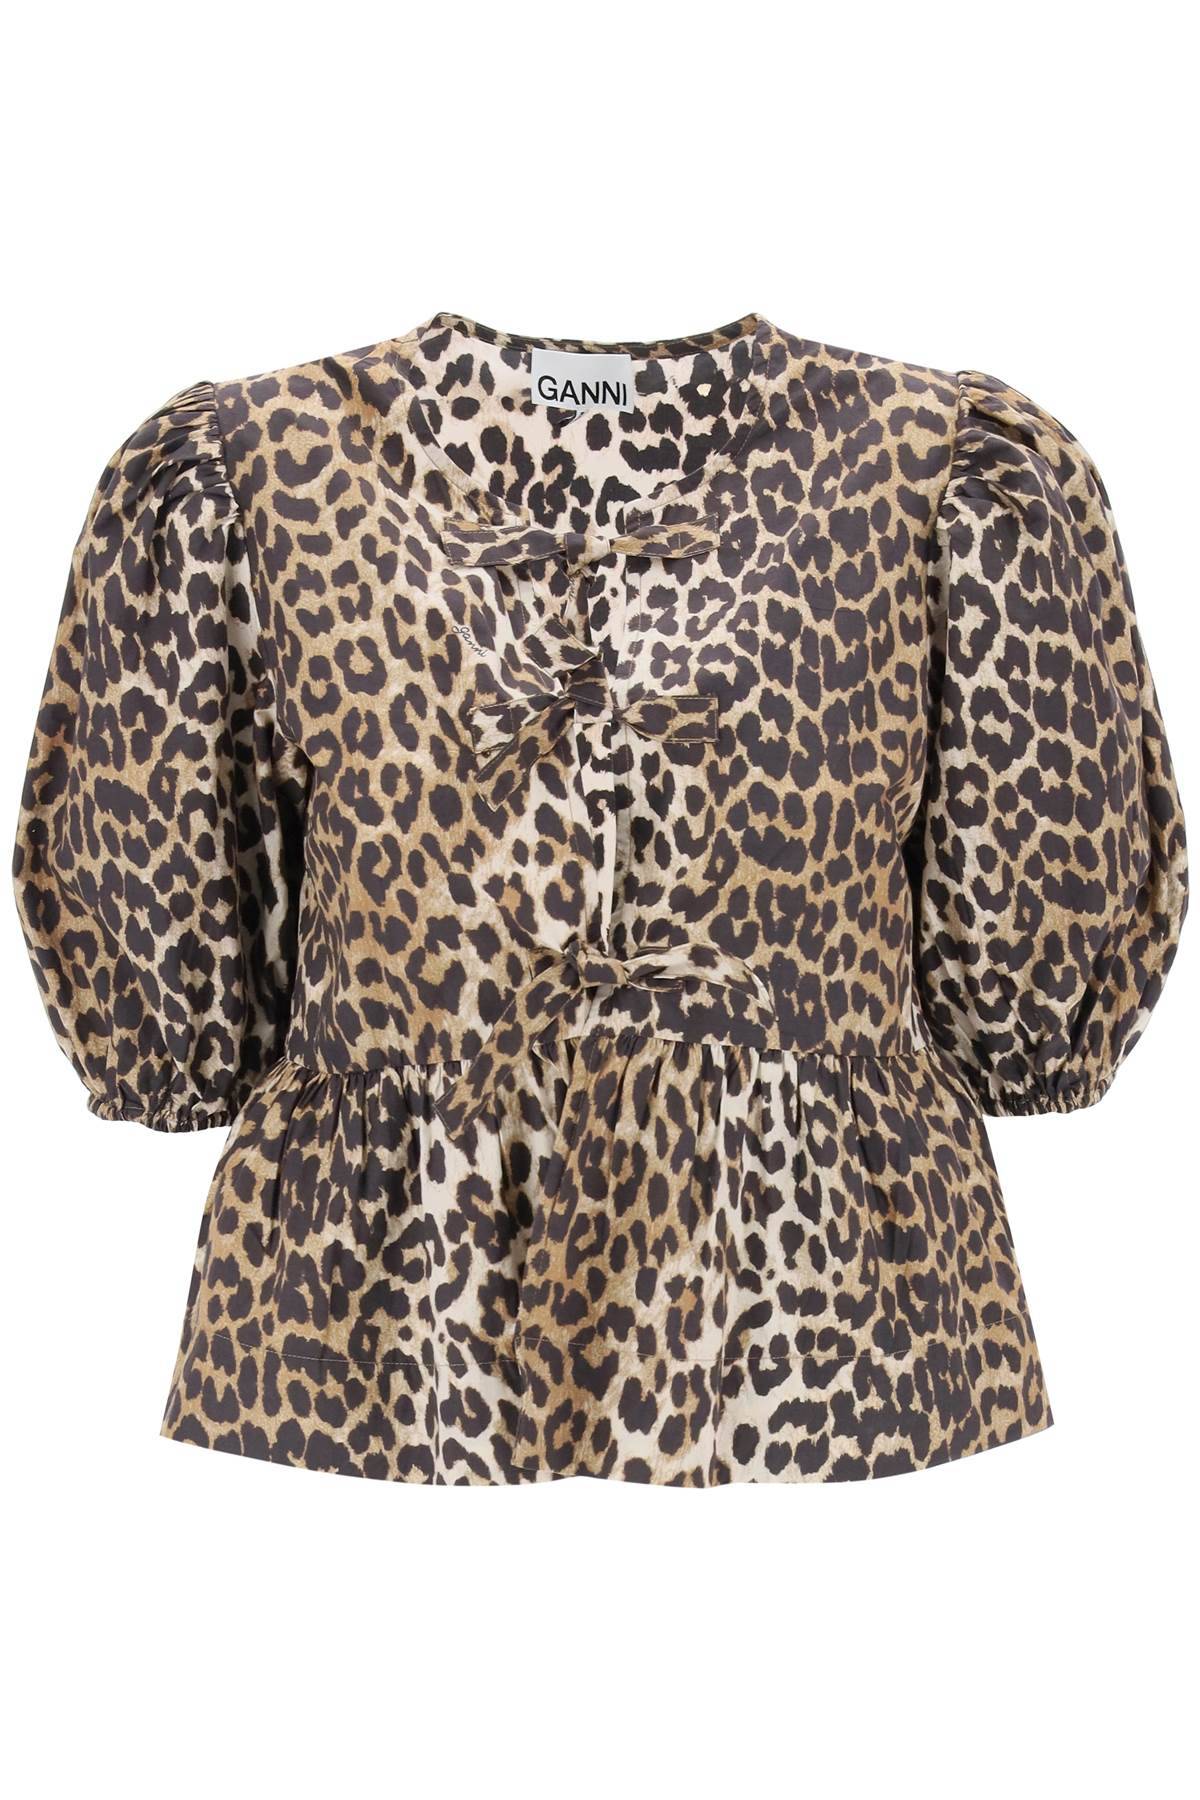 Ganni GANNI leopard print peplum blouse